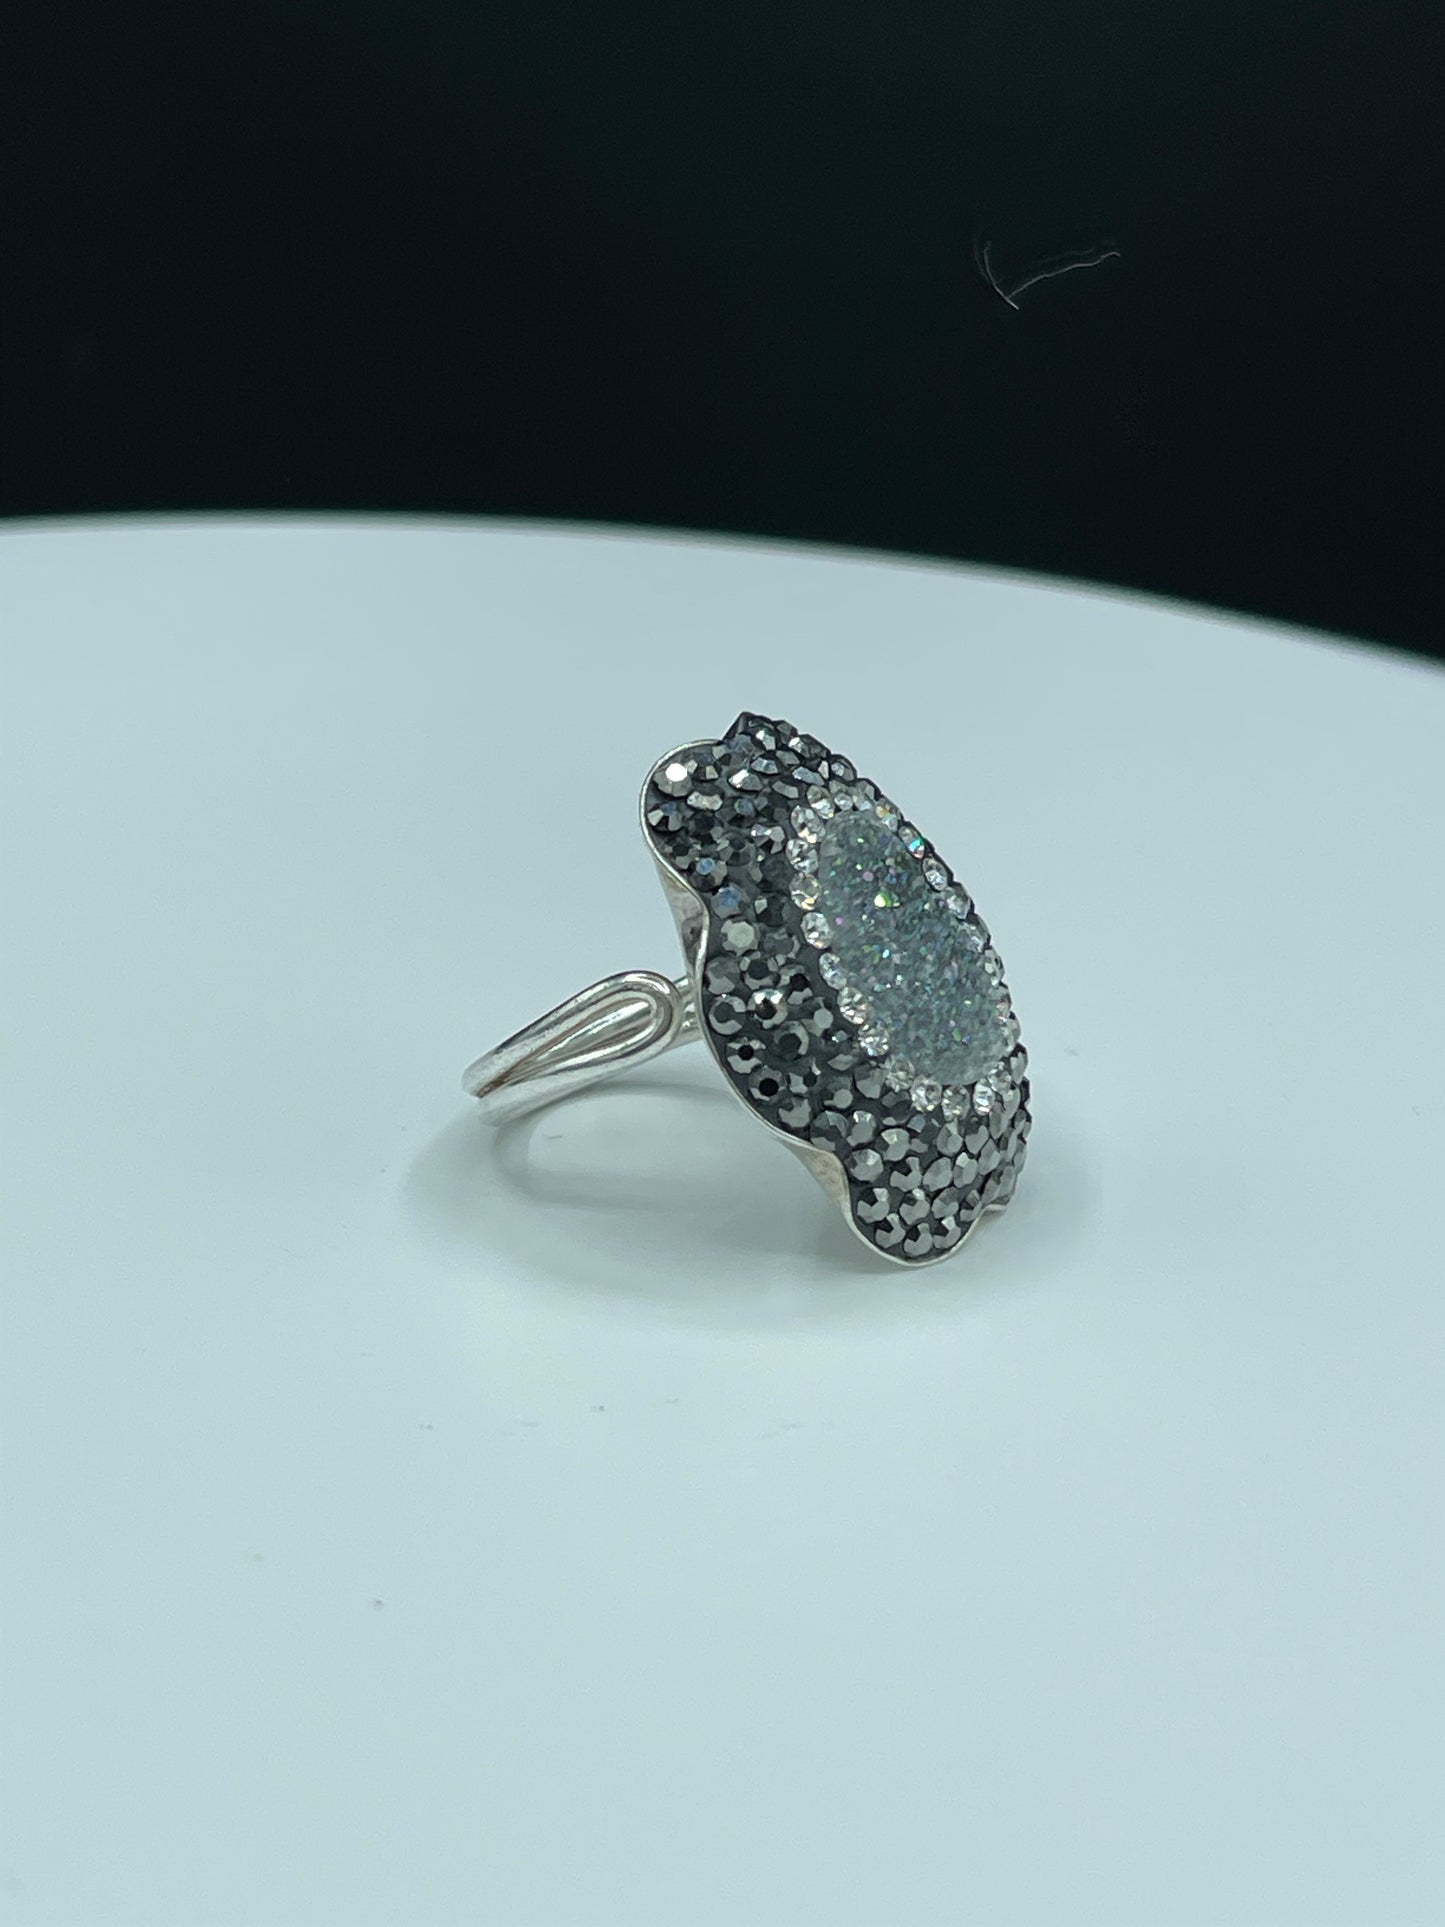 Natural Druzy Quartz & Swarovski Crystal Sterling Silver Adjustable Ring